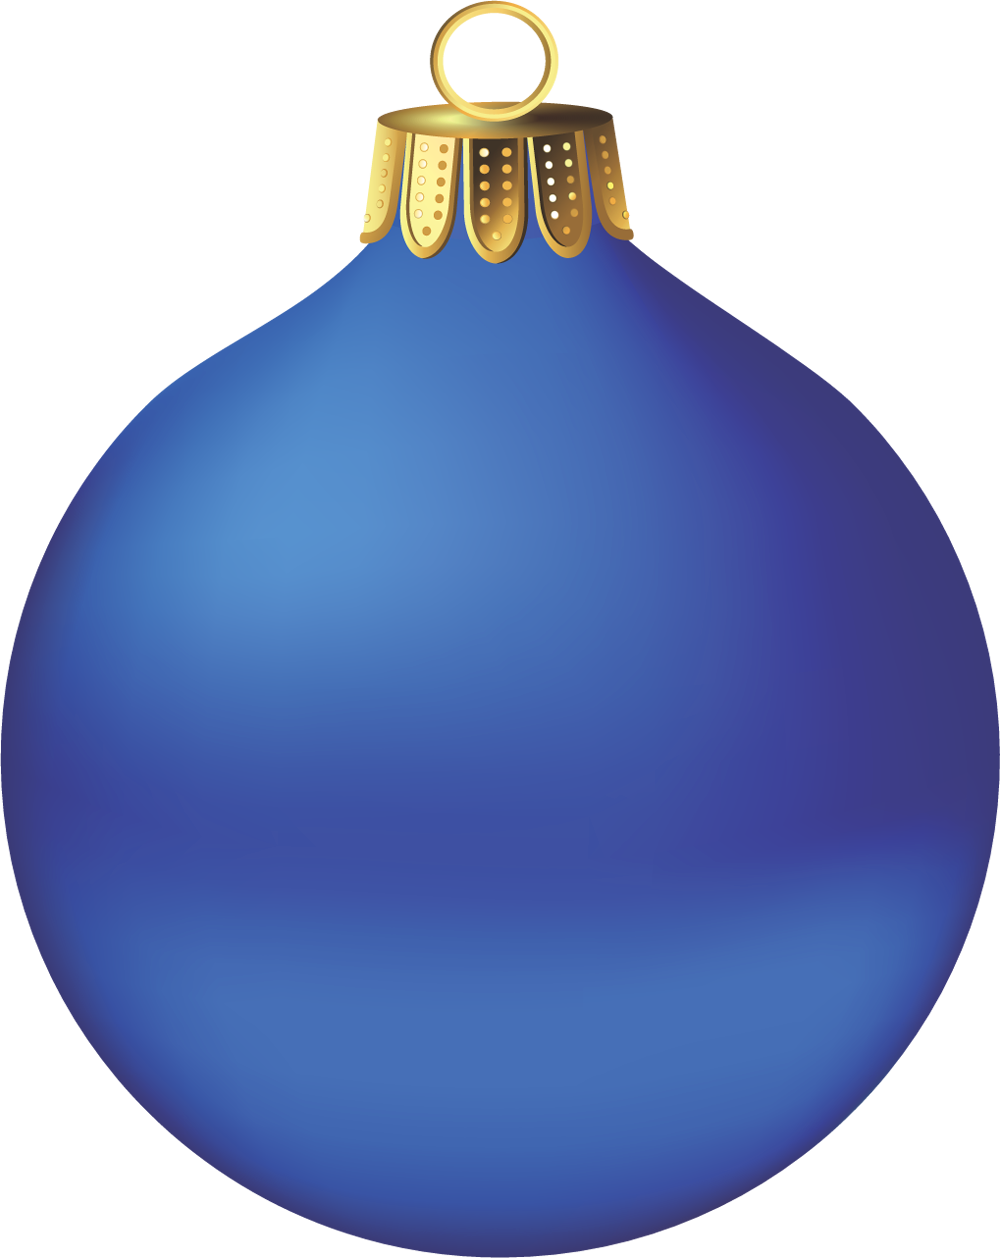 2014 Clipartpanda Com About T - Christmas Ornament Clip Art